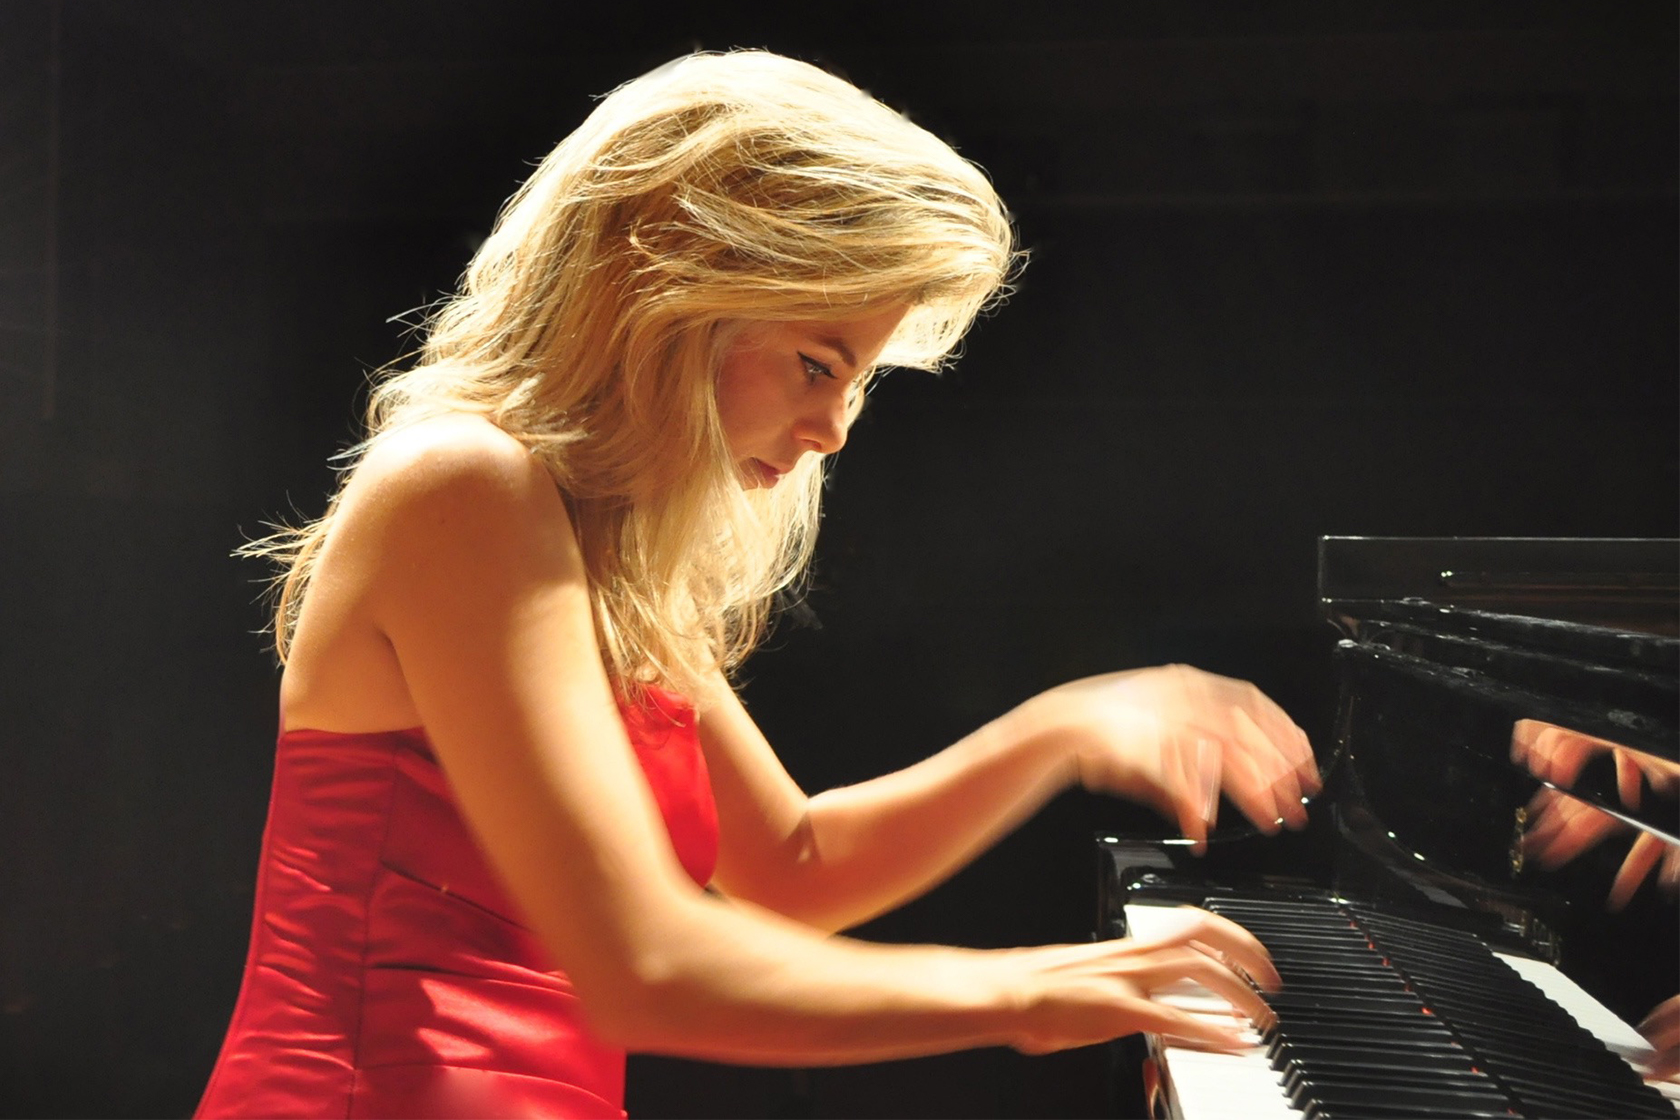 Petra Persolja performing piano solo